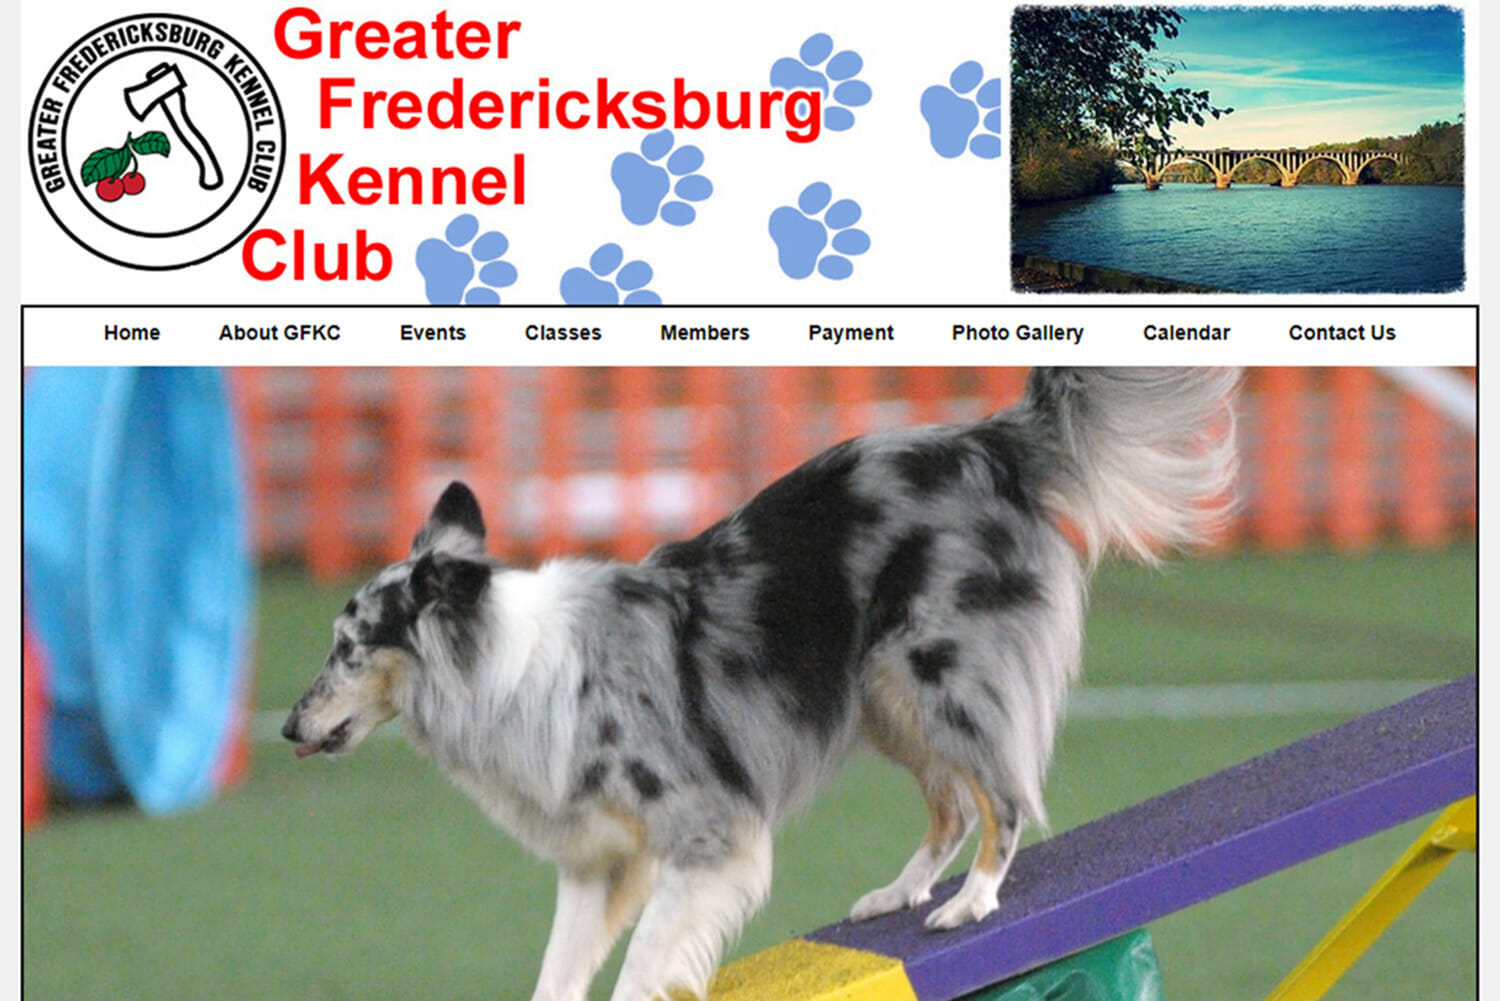 Greater Fredericksburg Kennel Club